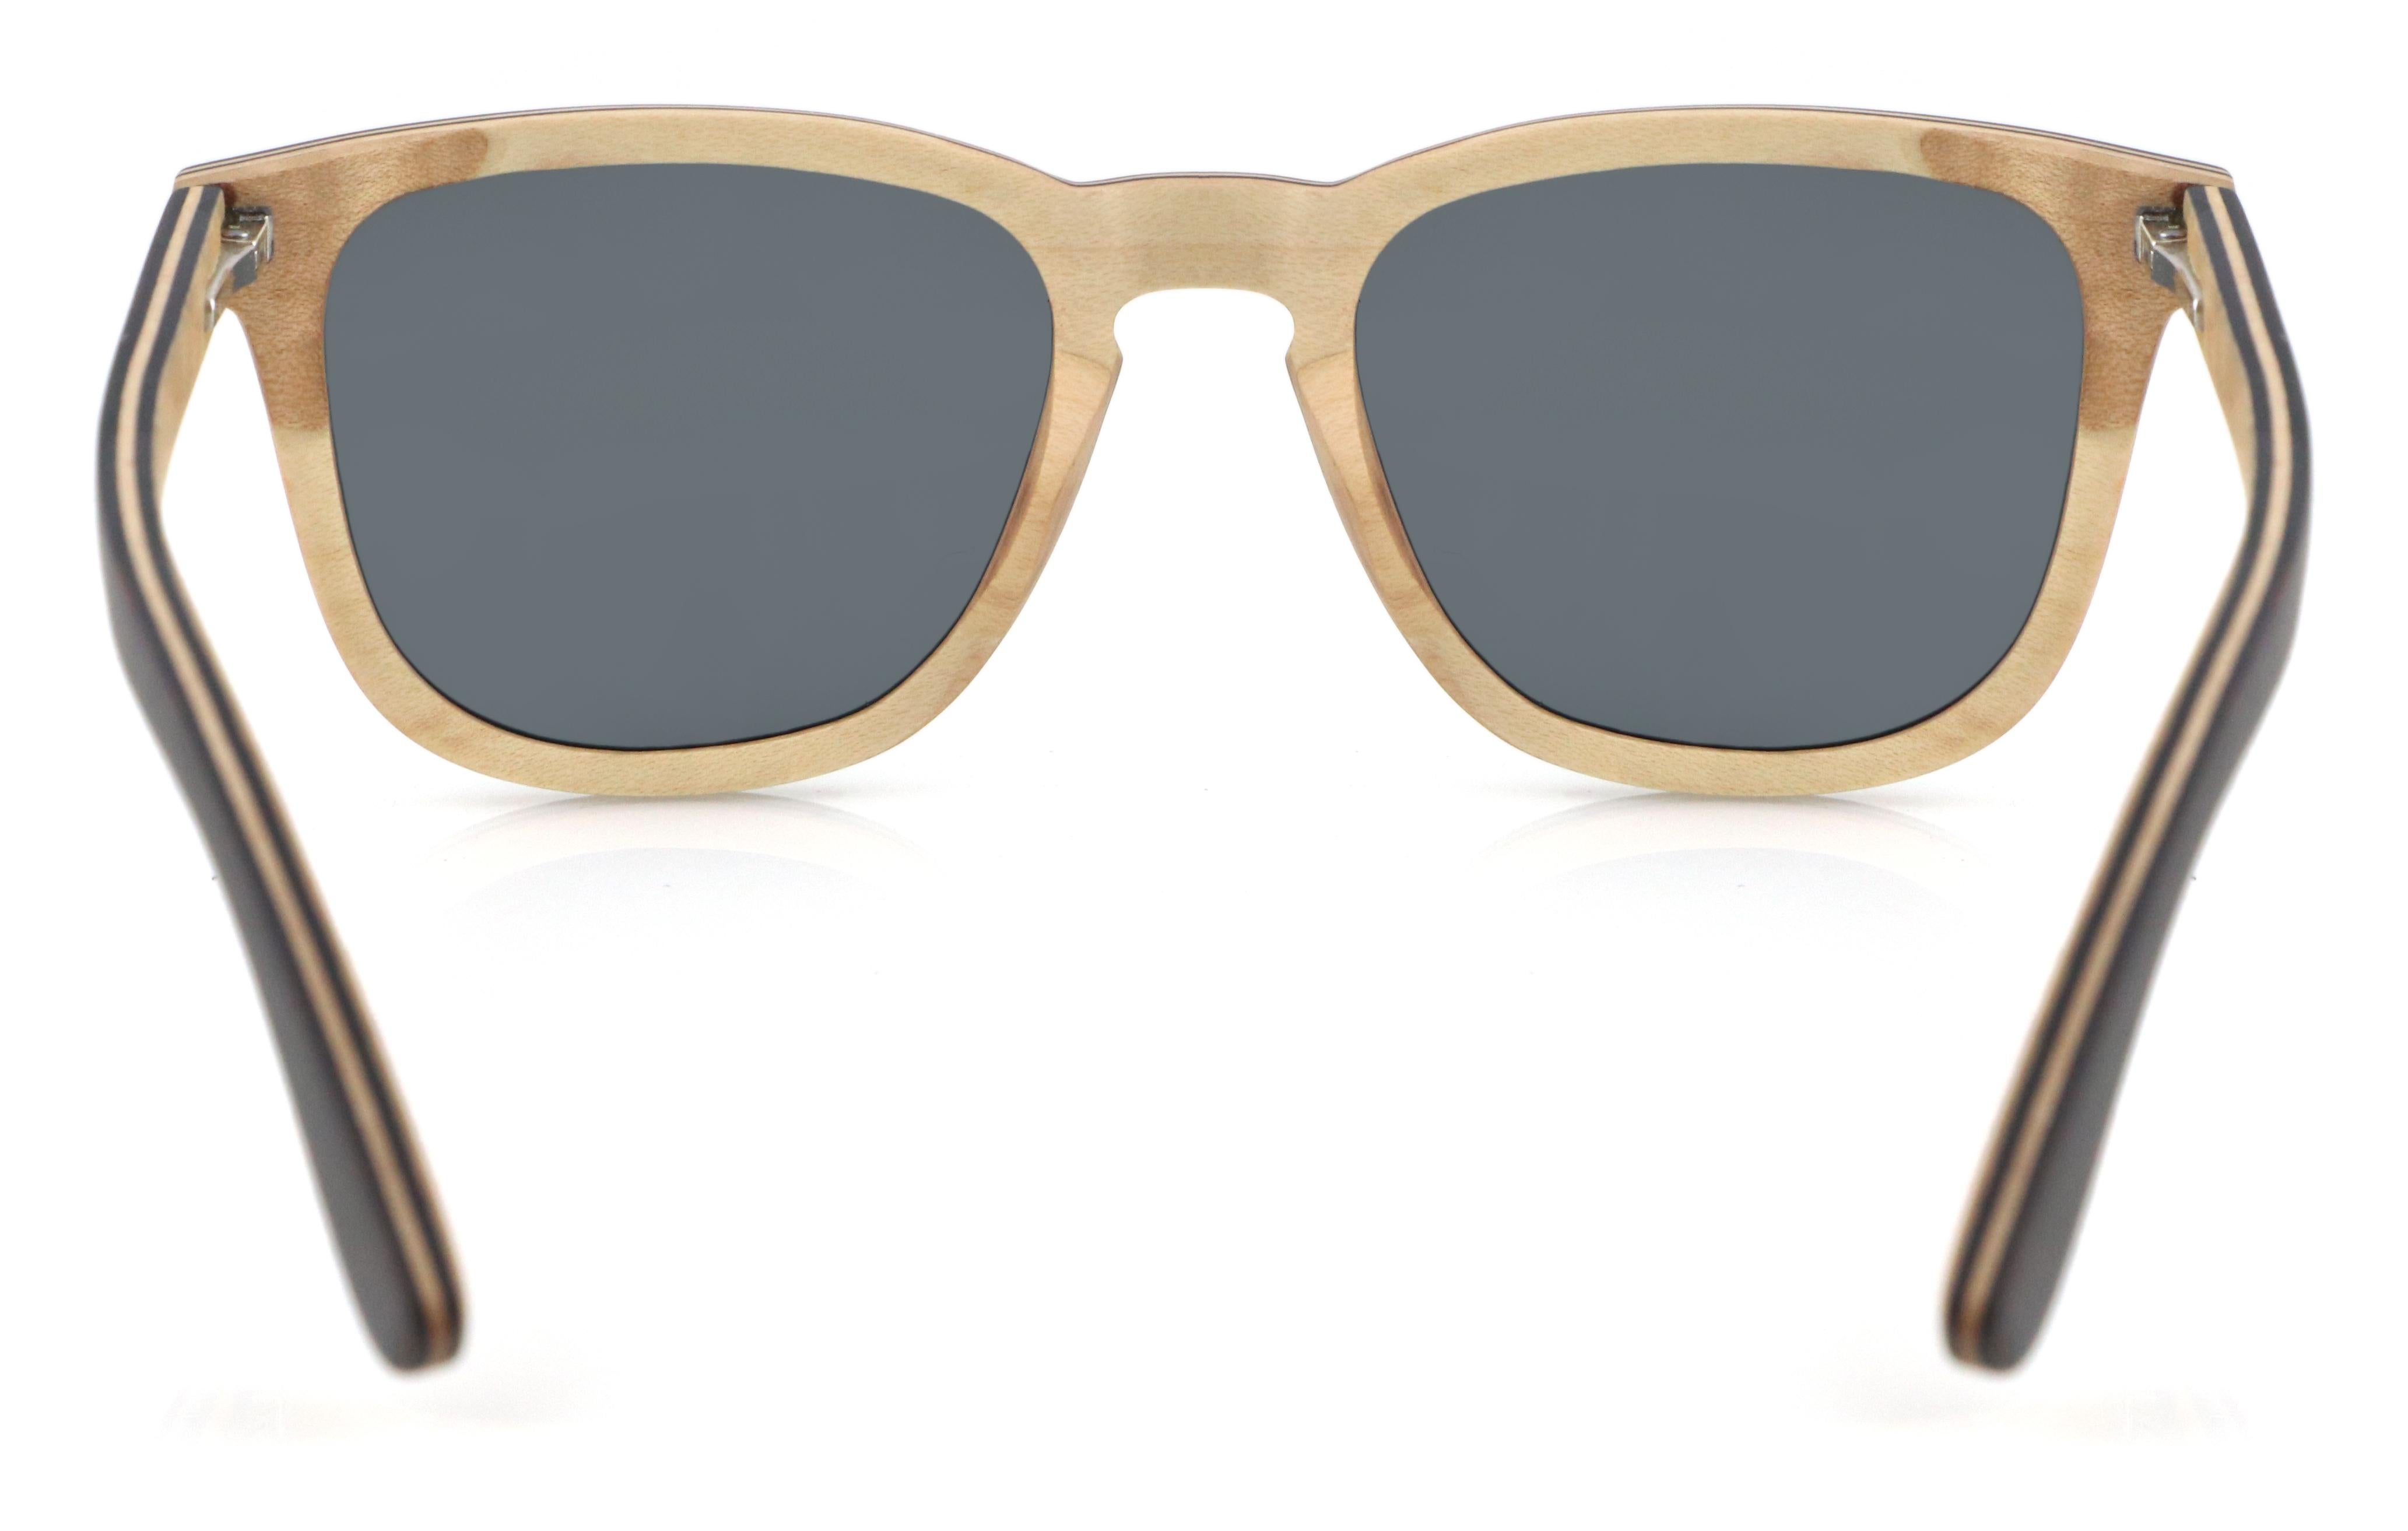 Gray Bambood shells sunglasses